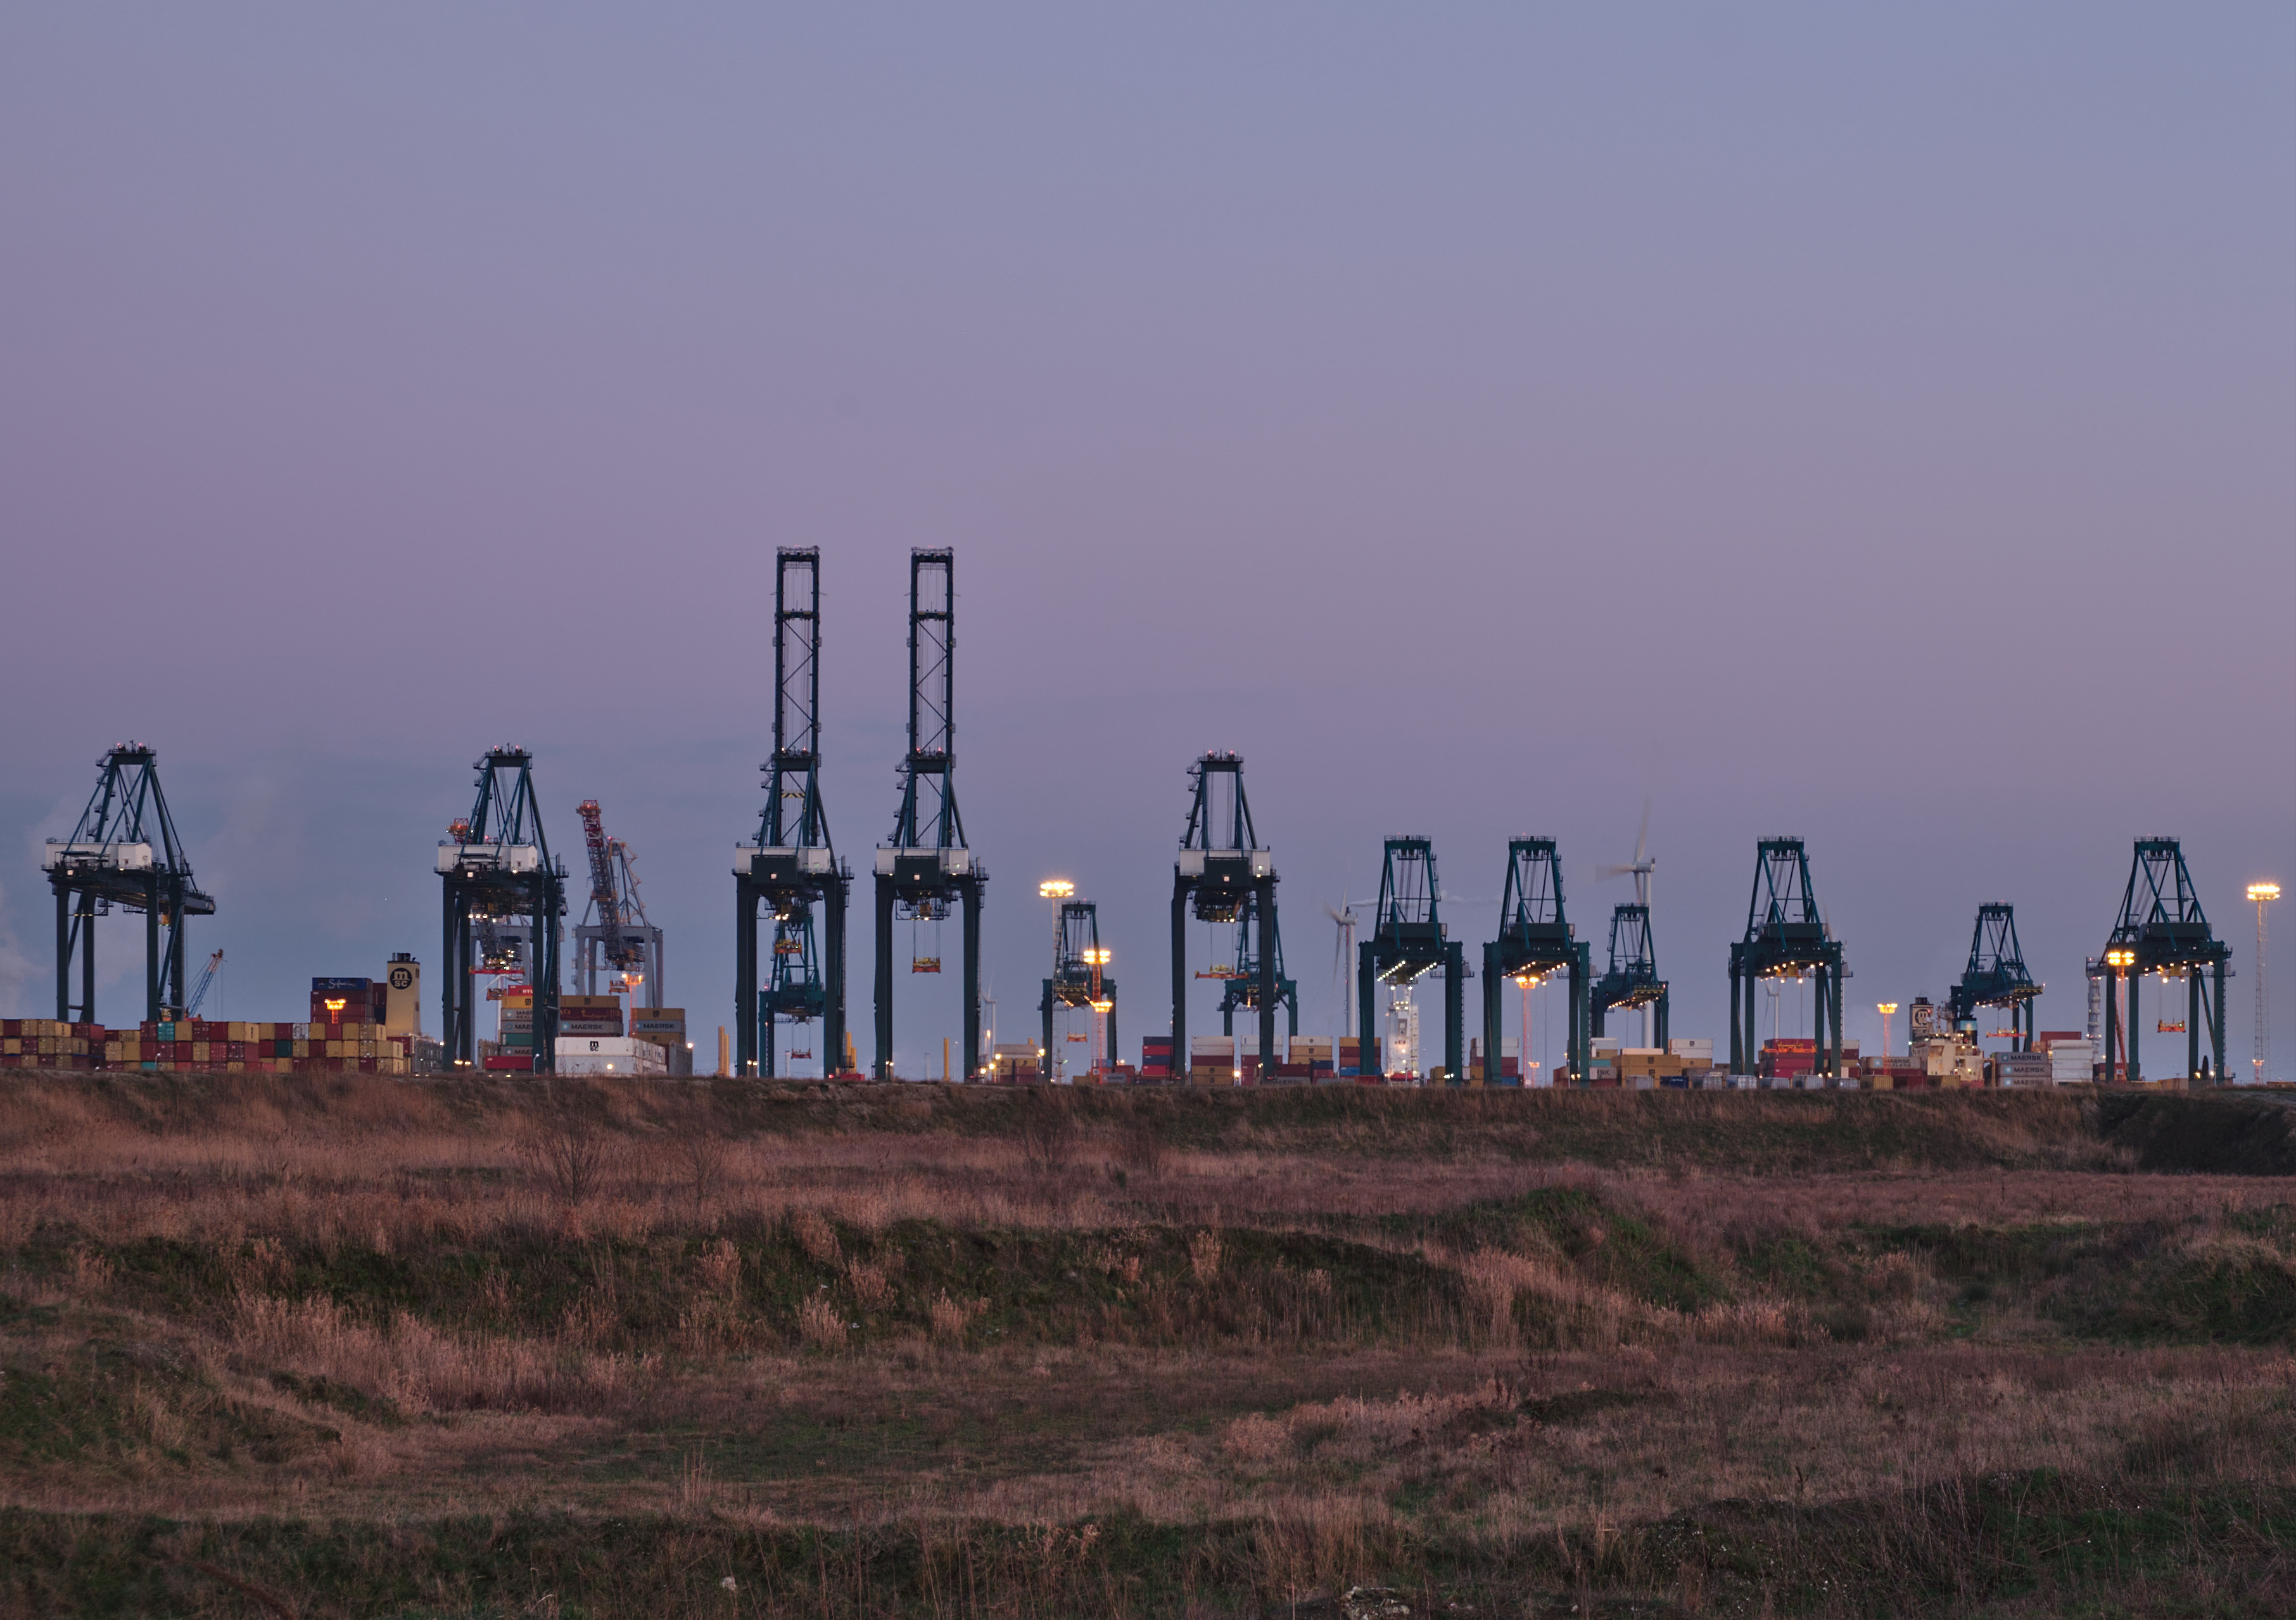 Container cranes at the MPET- MSC PSA European Terminal in Port of Antwerp (Kieldrecht, Belgium) during the sunset civil twilight (DSCF3919)